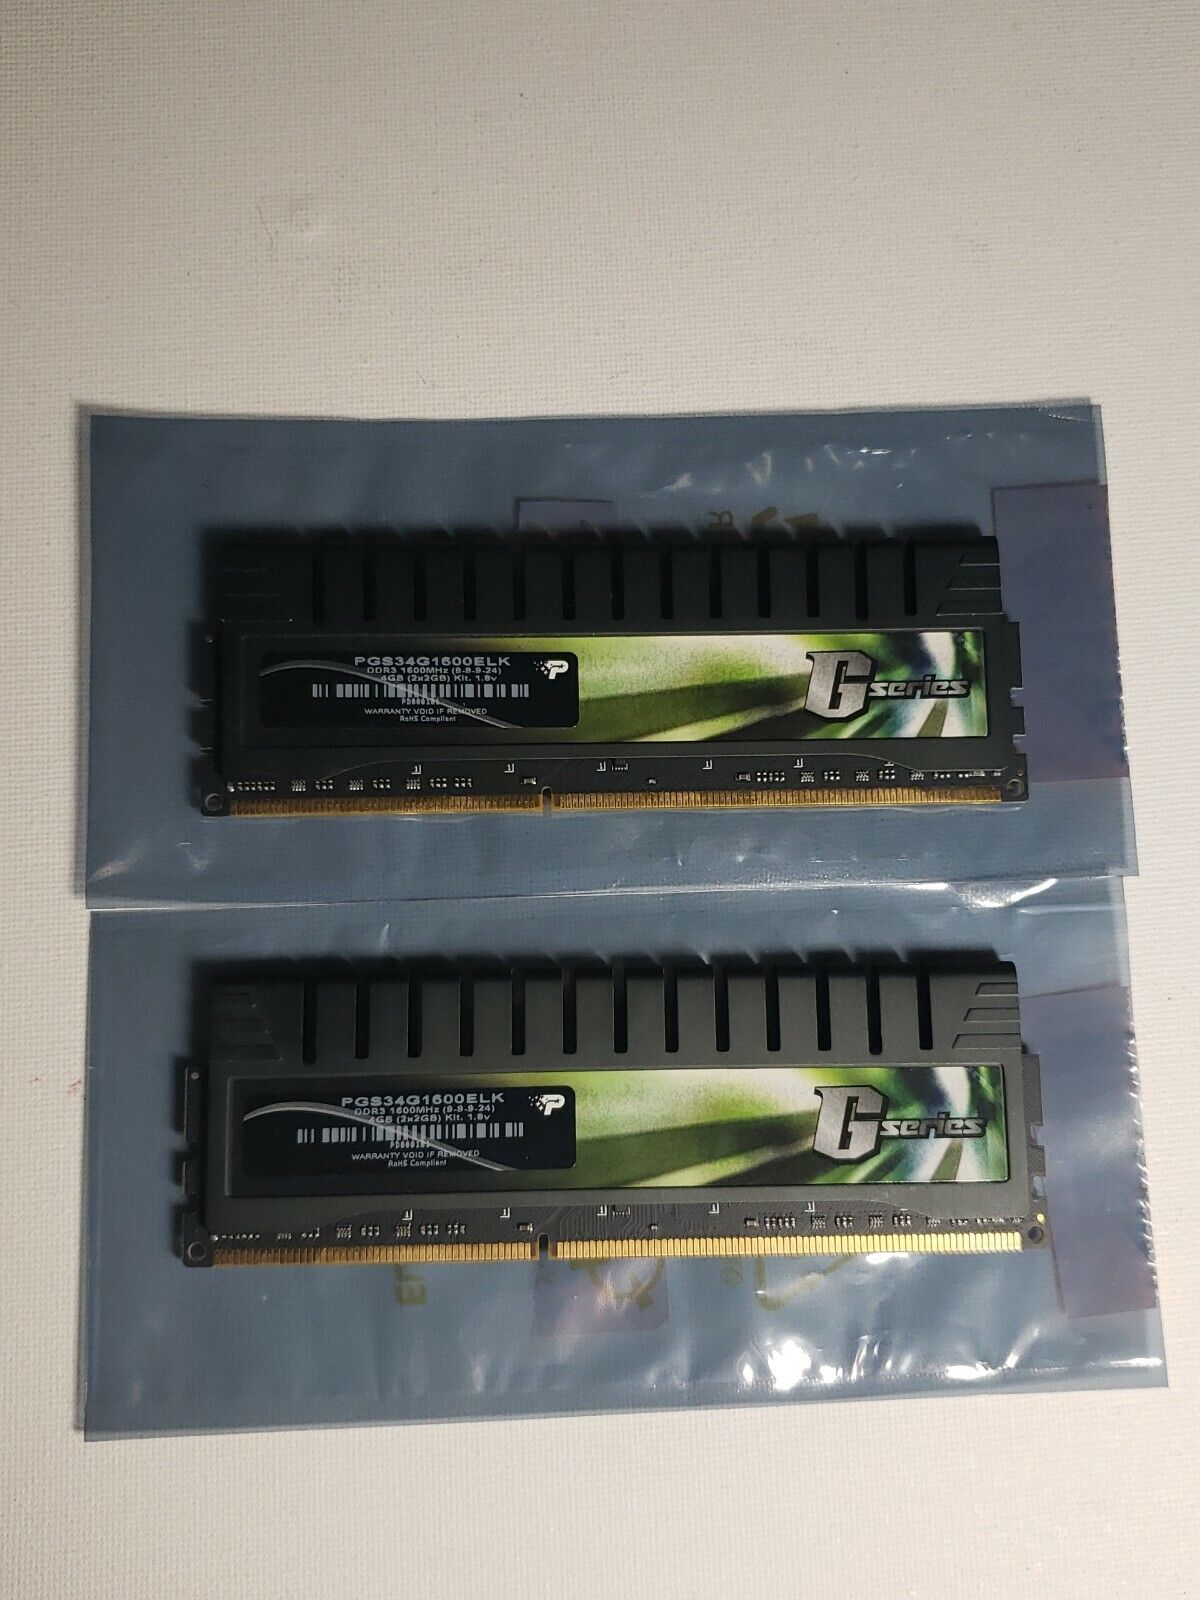 Patriot G Series DDR3 memory ram PGS34G1600ELK 1600mhz 8gb (2x4)